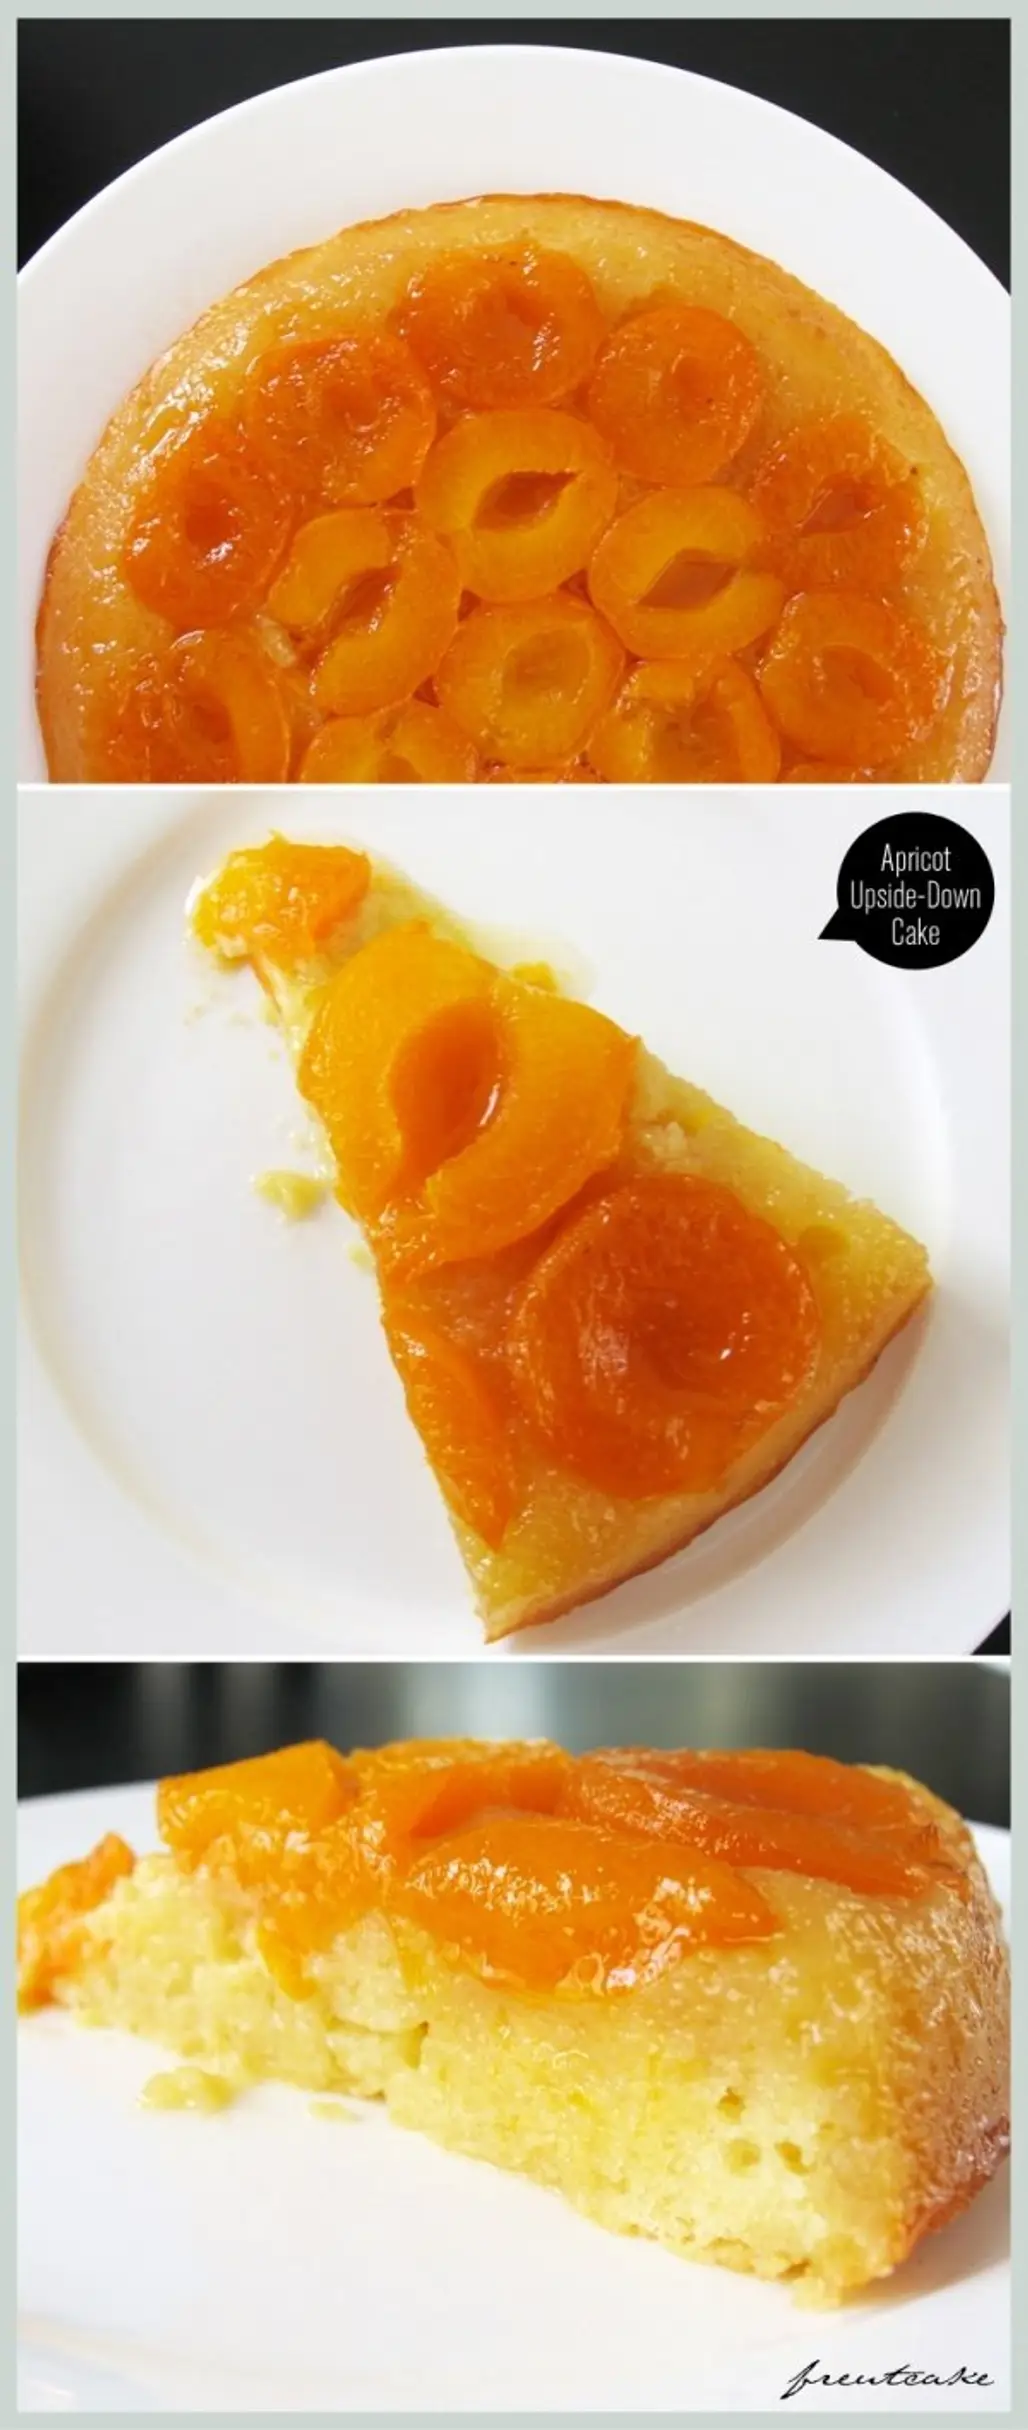 Apricot Upside down Cake